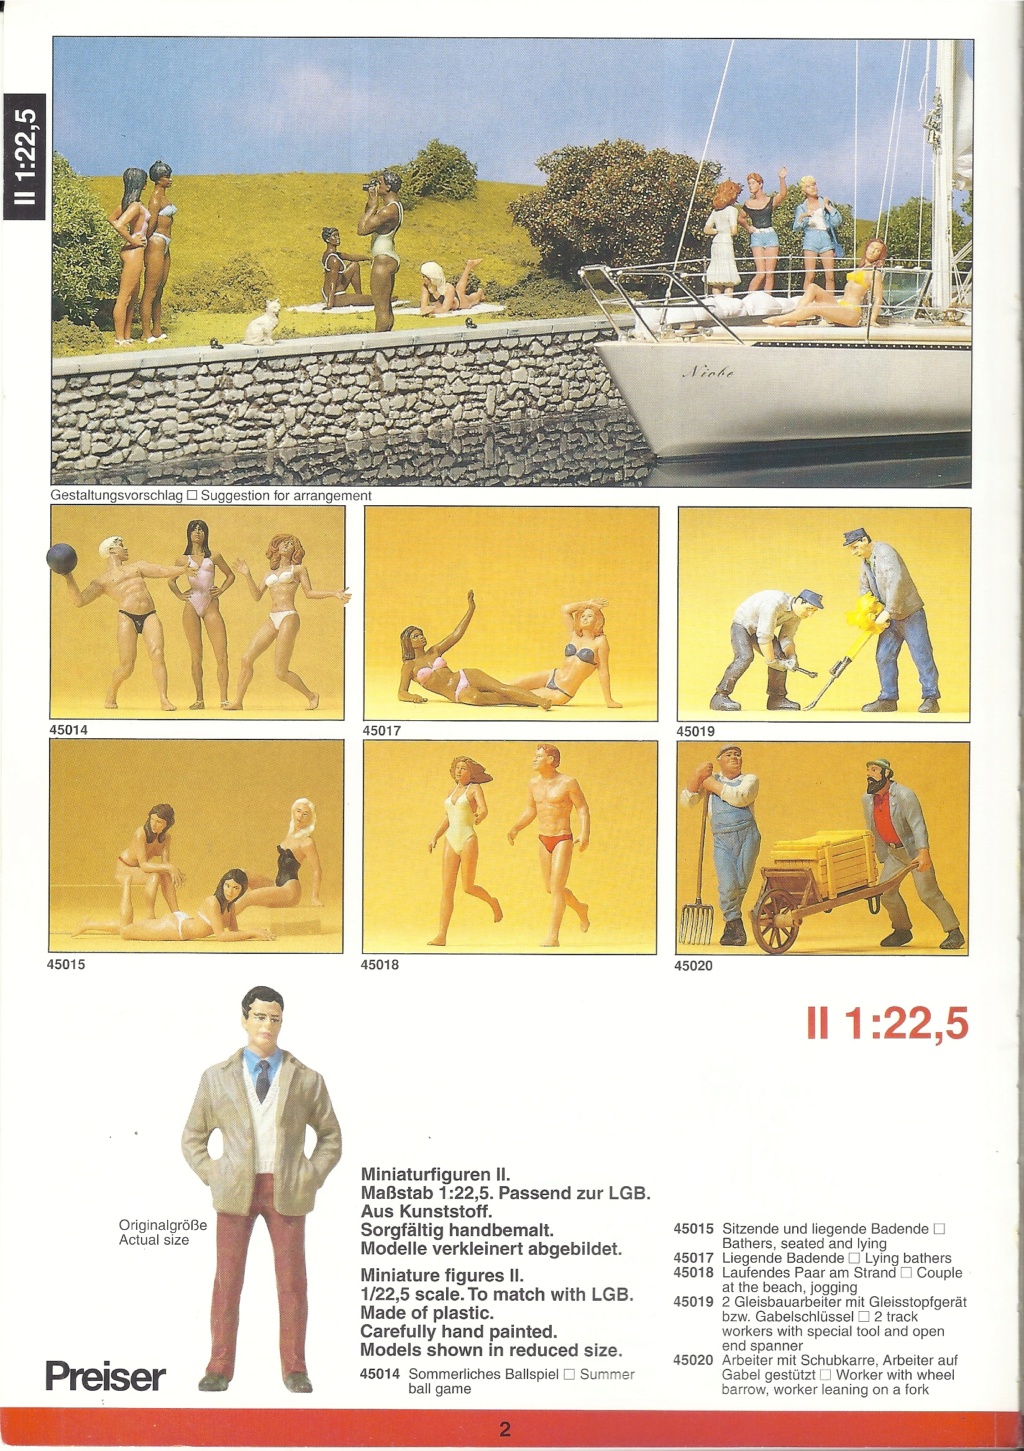 [PREISER 1996] Catalogue elastolin 1996 Preis142